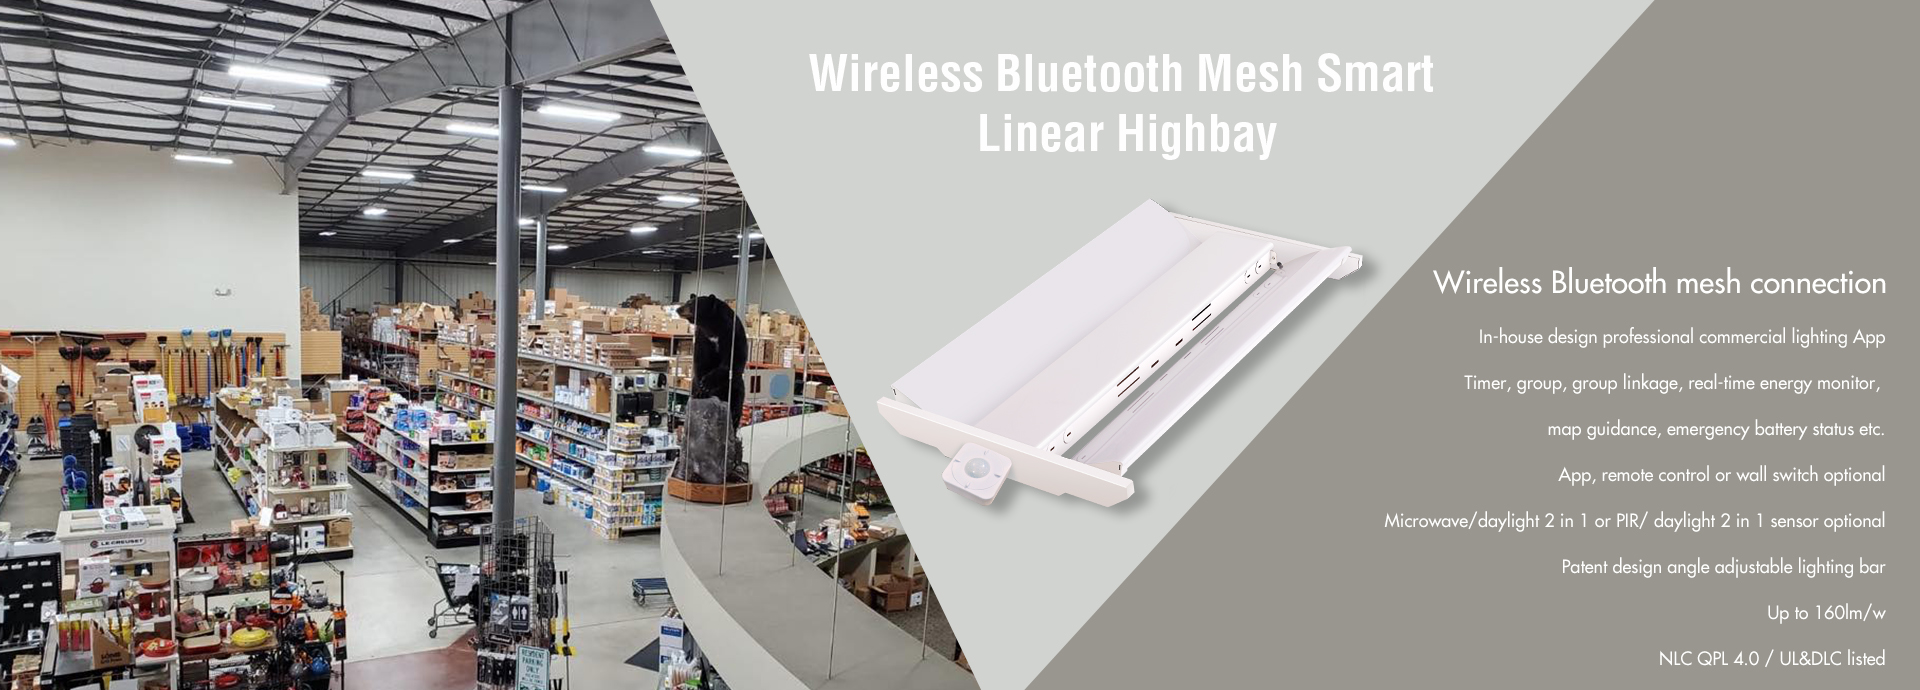 Smart Bluetooth Linear High Bay wireless lighting system